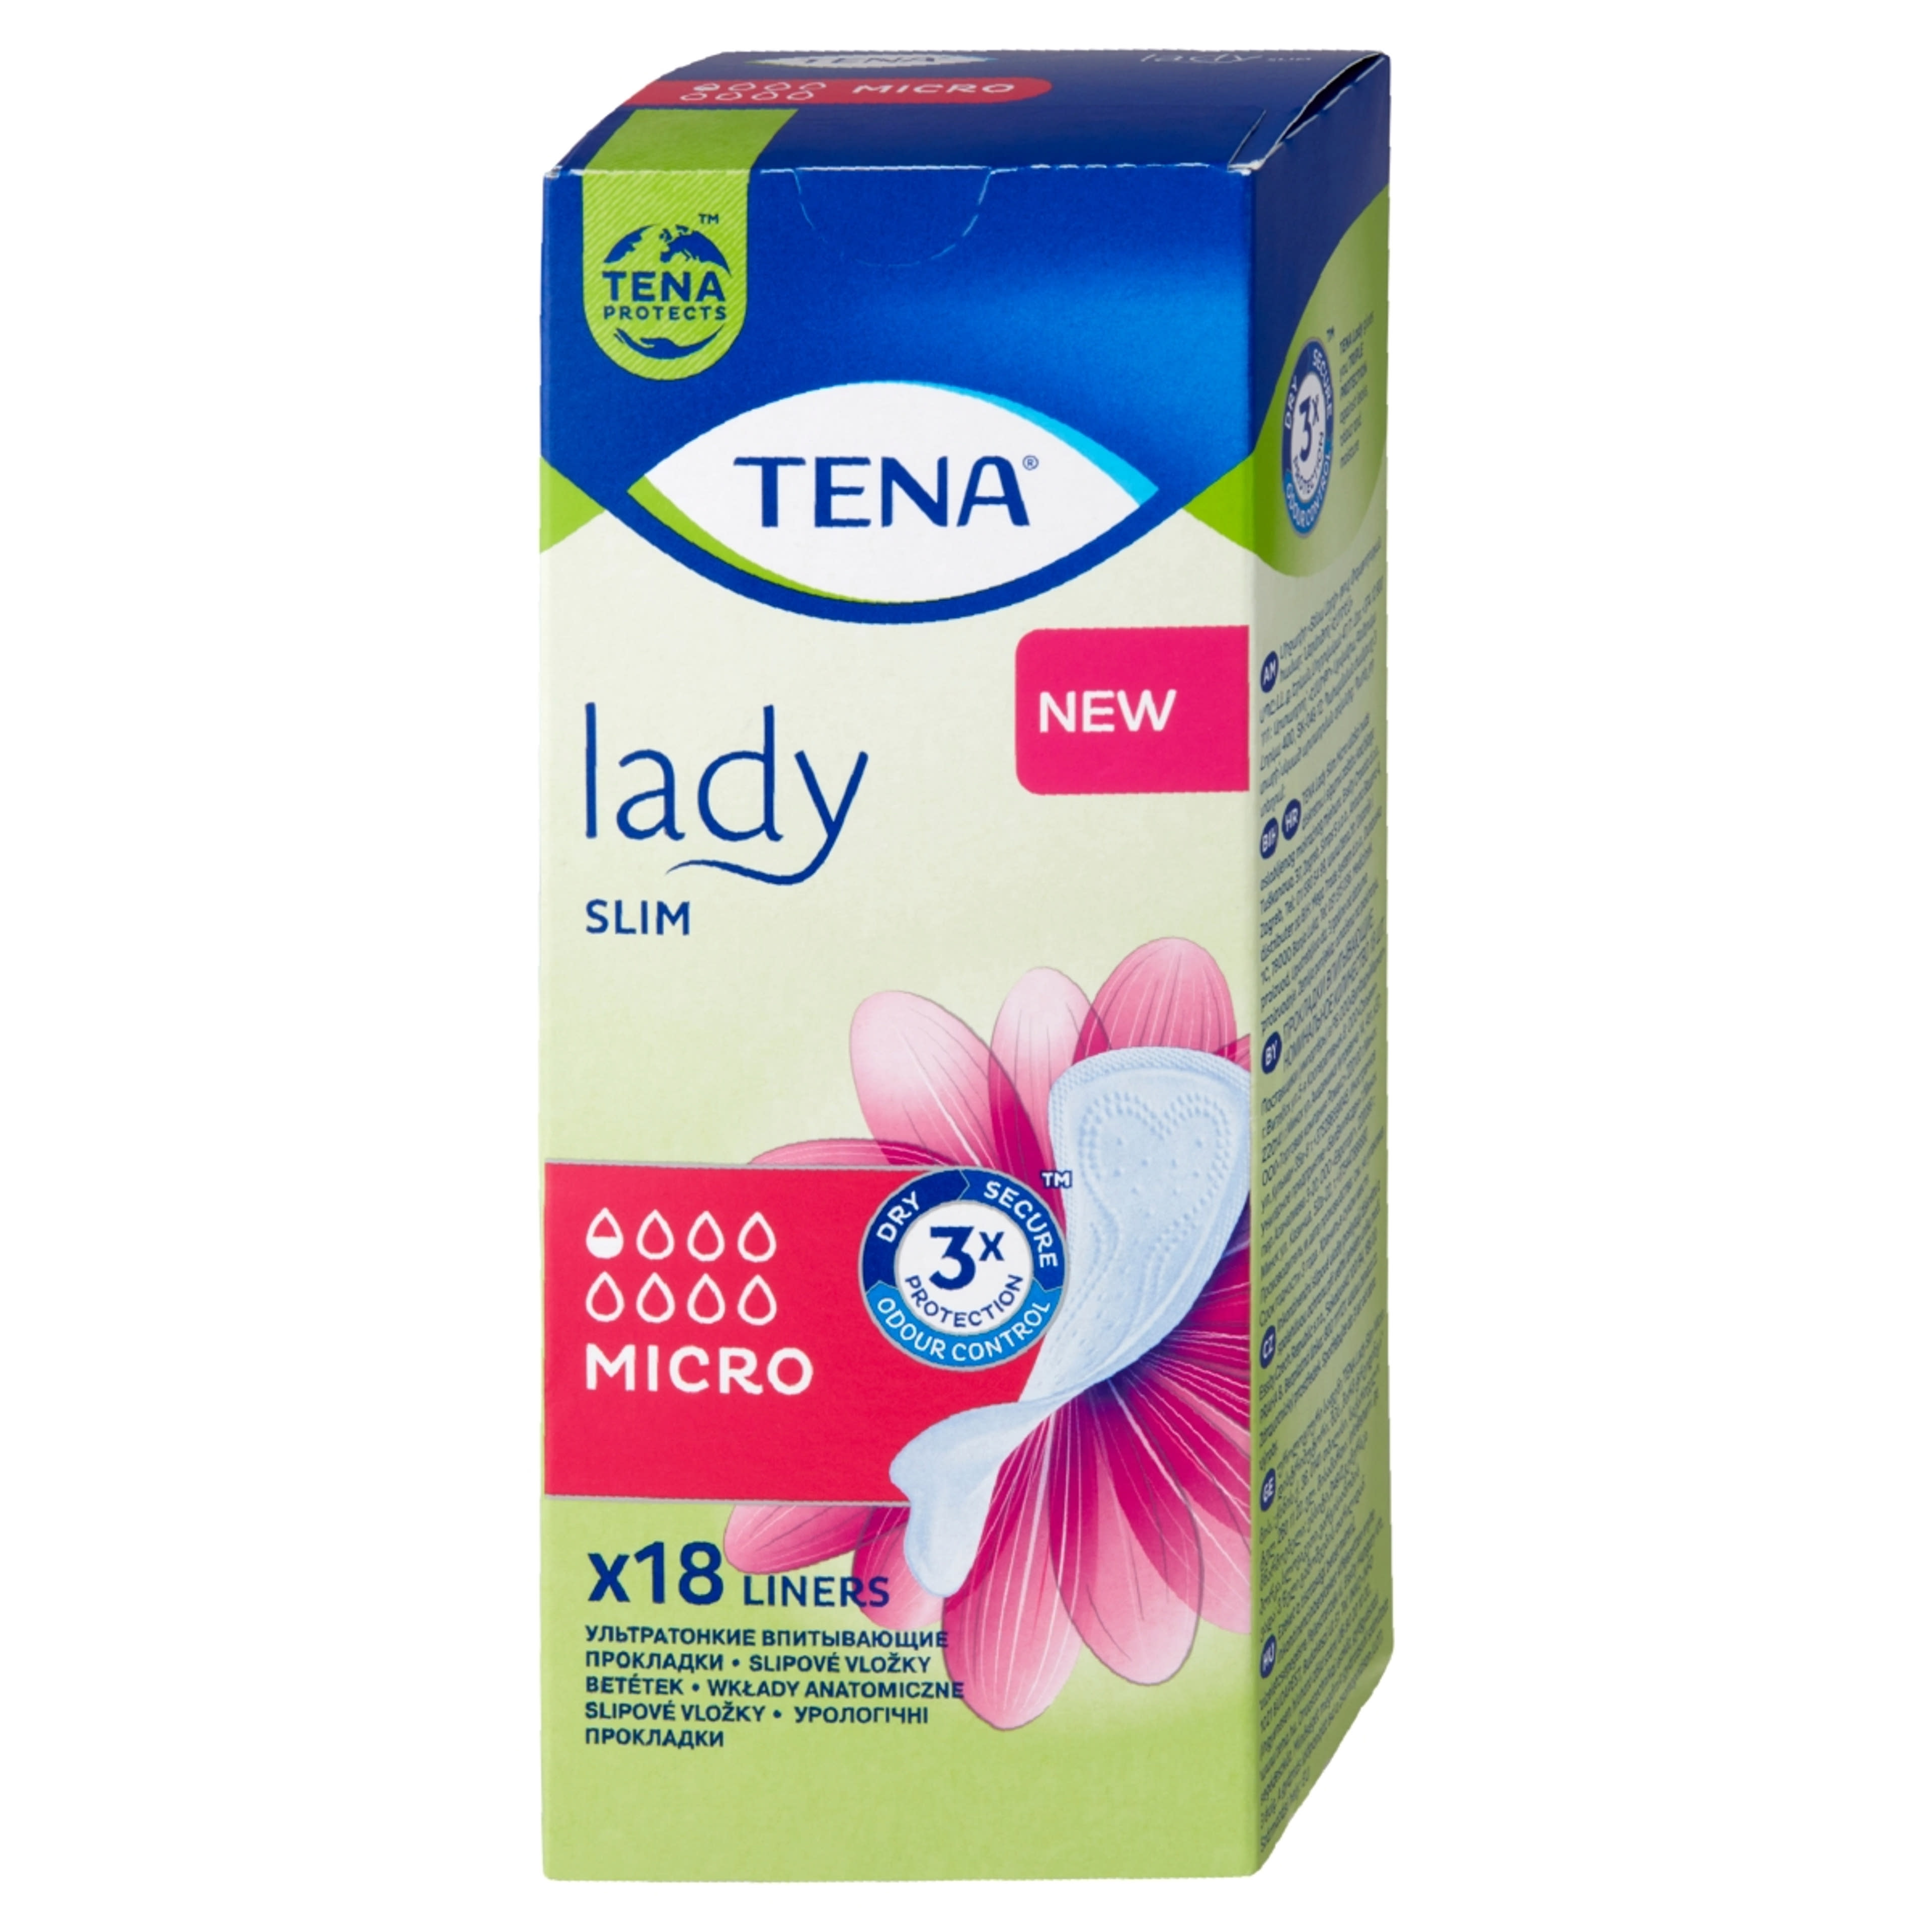 Tena Lady inkontinencia slim micro - 18 db-4